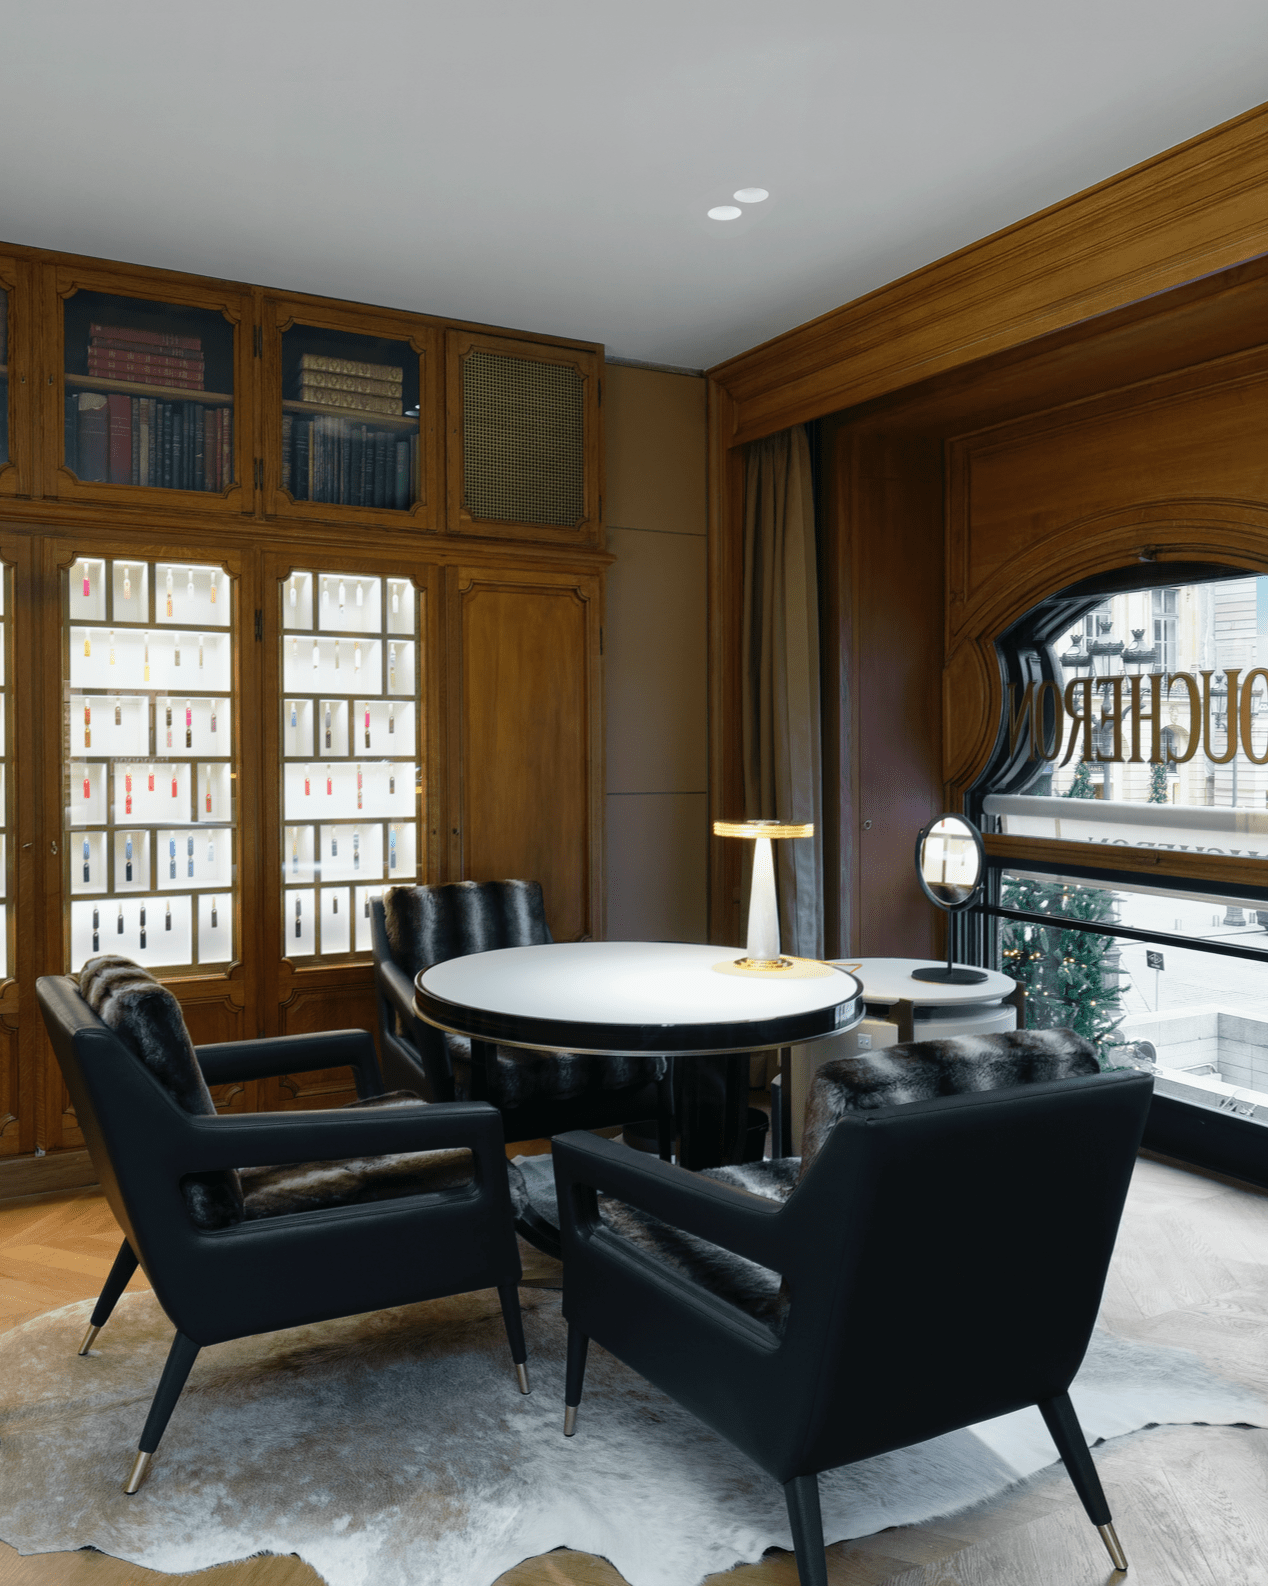 Boucheron Flagship  Salon de l’Horlogerie (The Horology Room) - mezzanine